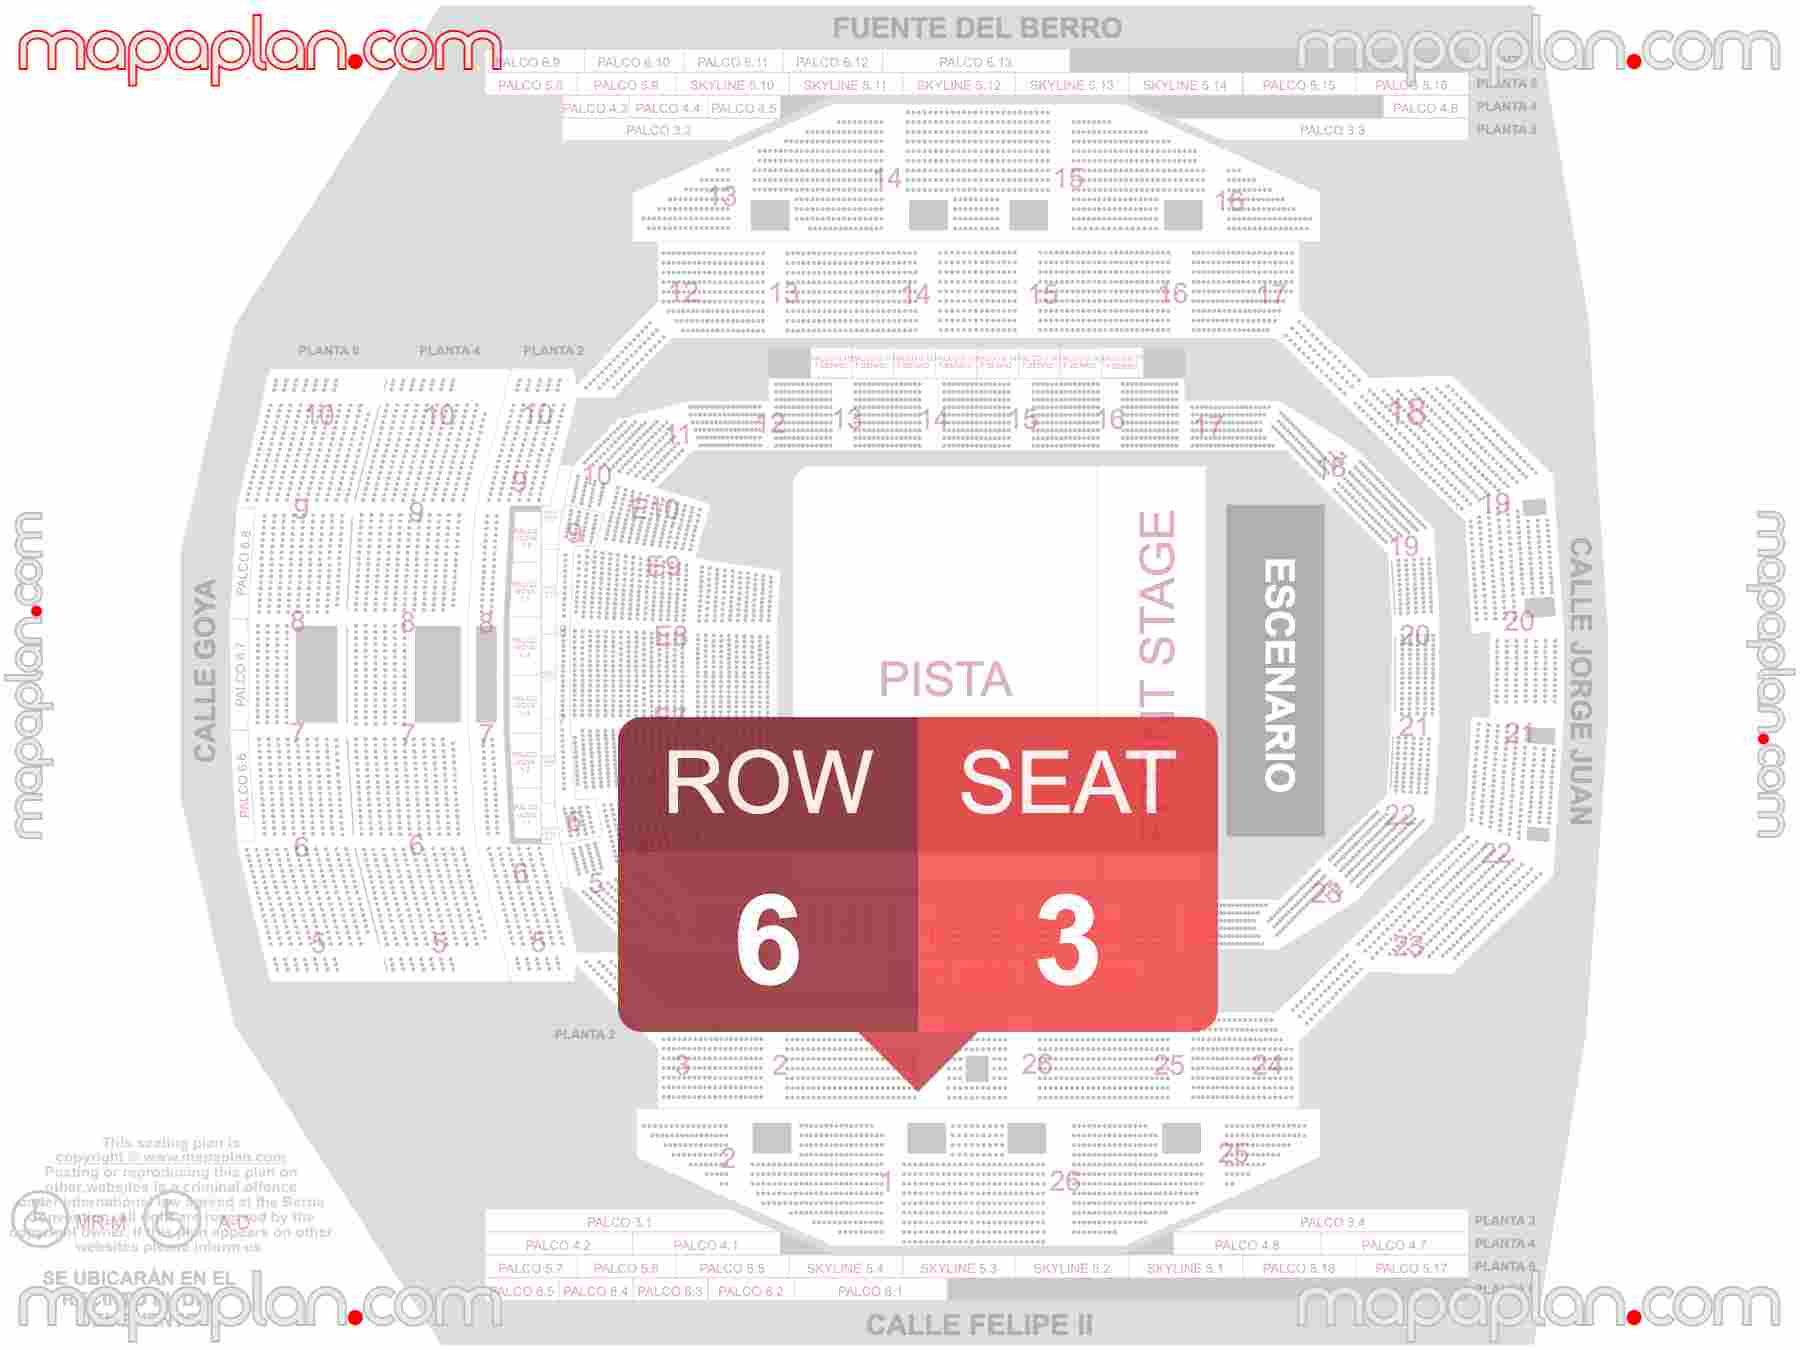 Madrid WiZink Center seating map Concerts (Conciertos mapa plano de asientos con numeros de asiento y fila) inside capacity view arrangement plan - Interactive virtual 3d best seats & rows detailed stadium image configuration layout